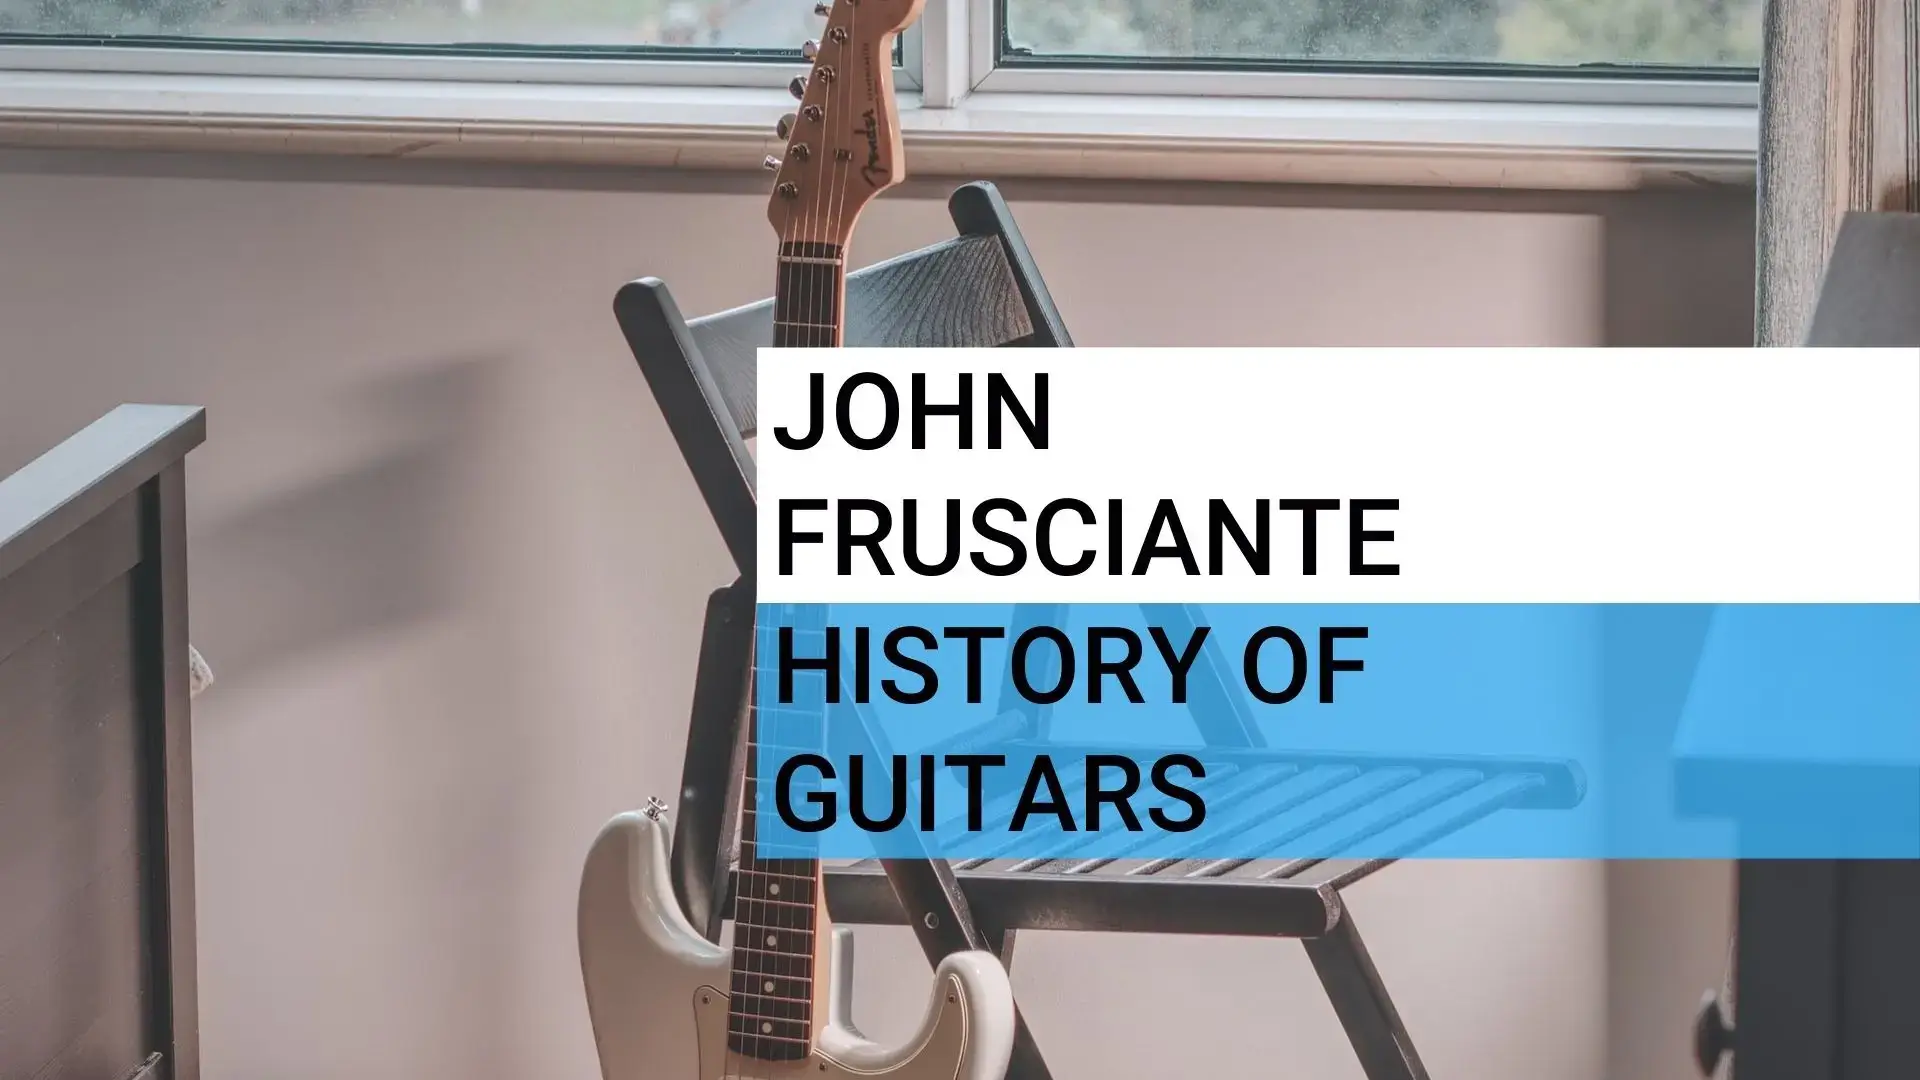 John Frusciante参加CD14枚セット